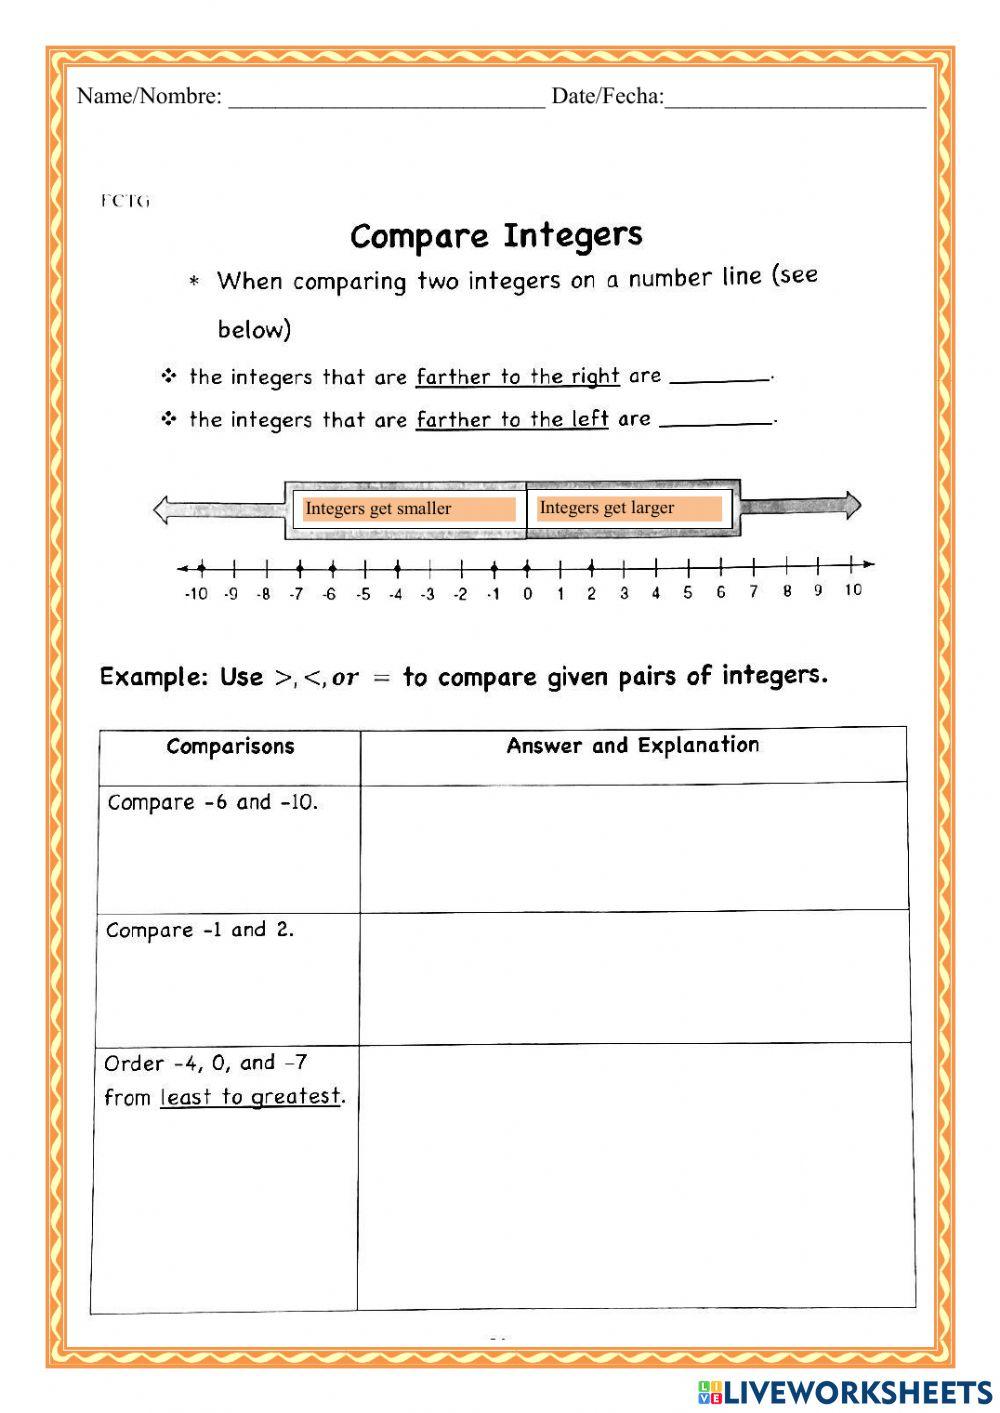 WCMFR Comparing Integers